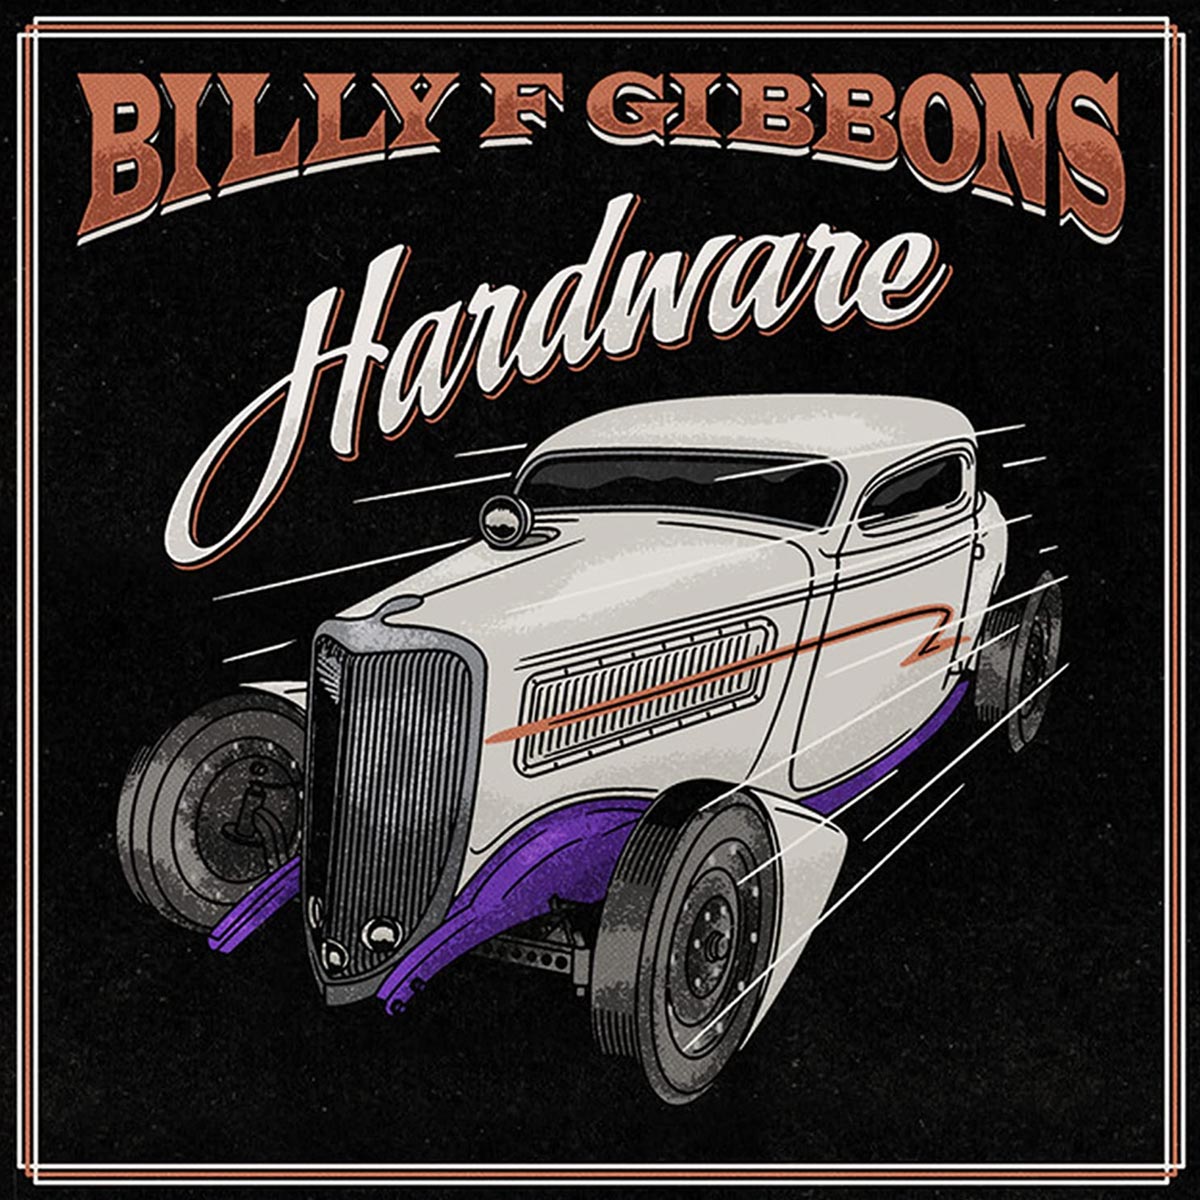 Gibbons Billy F: Hardware 2021